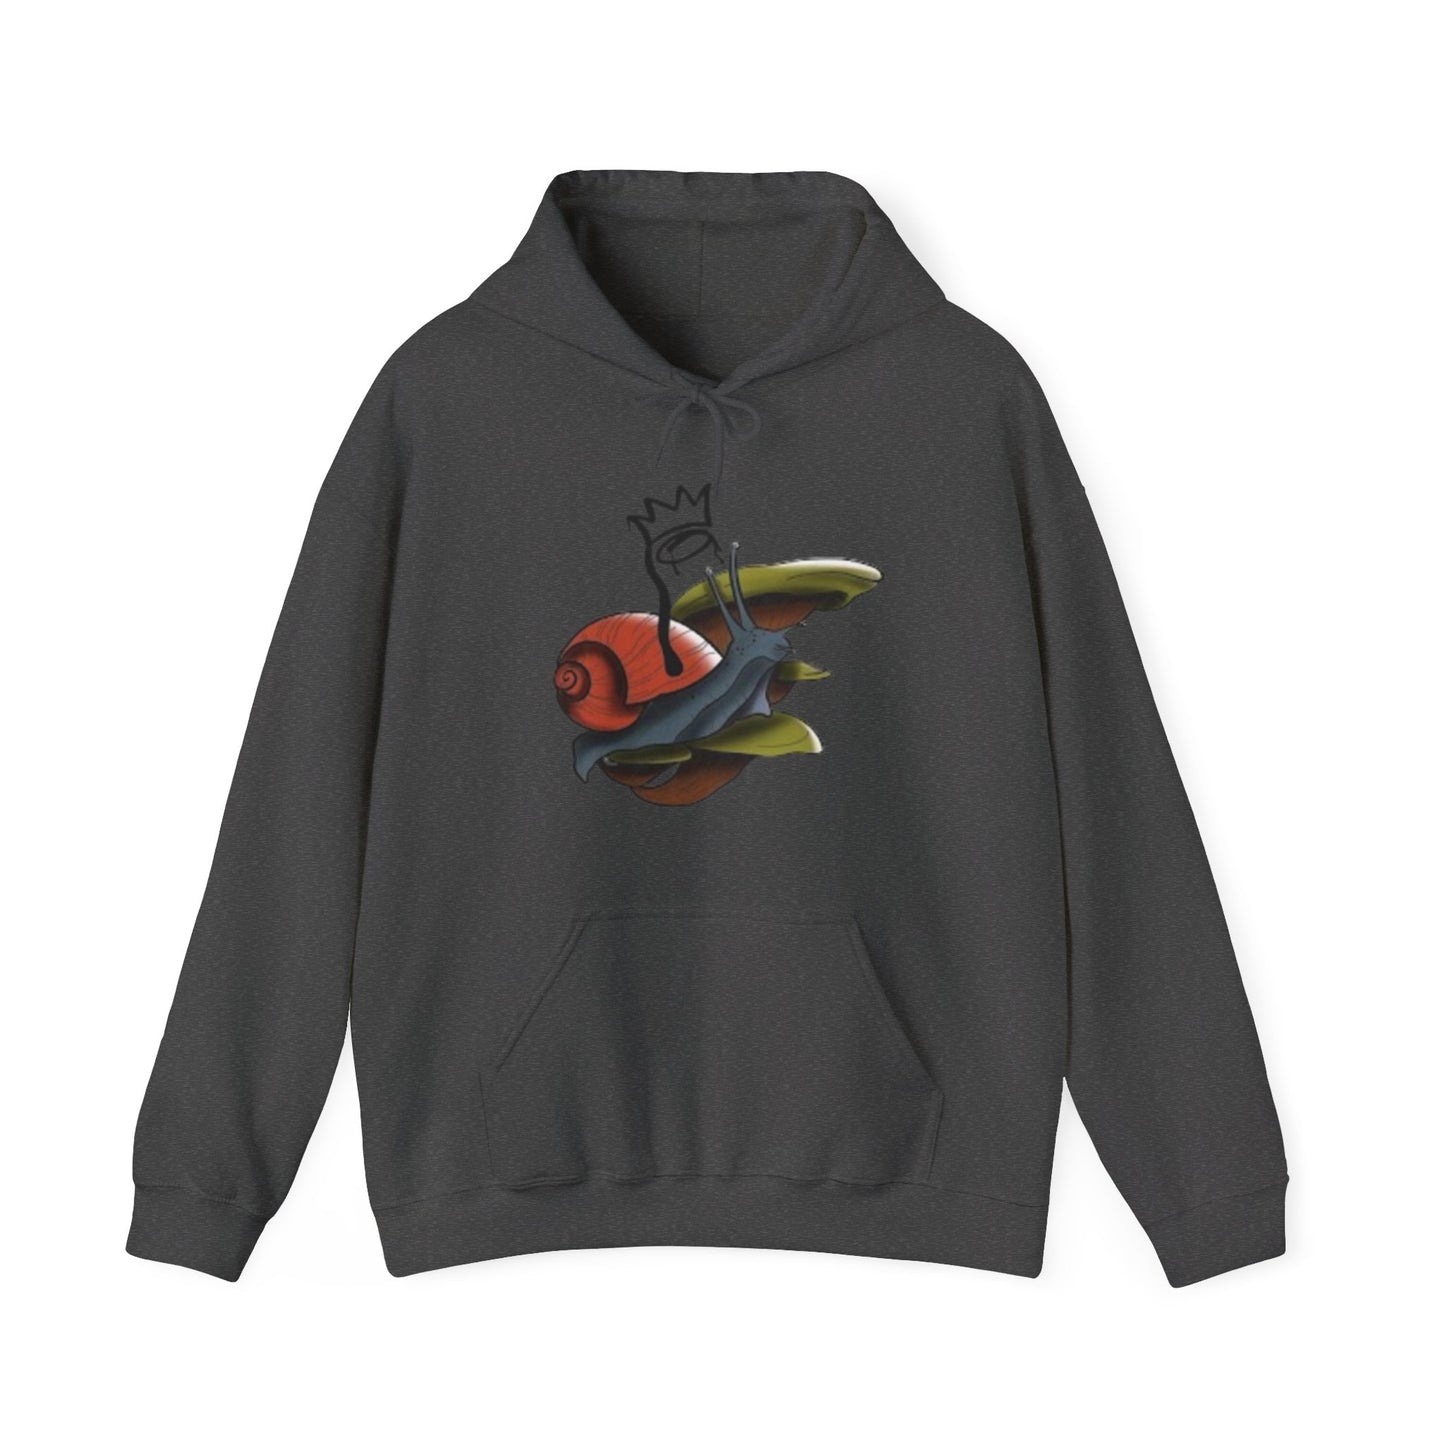 Taylors snail Hooded Sweatshirt